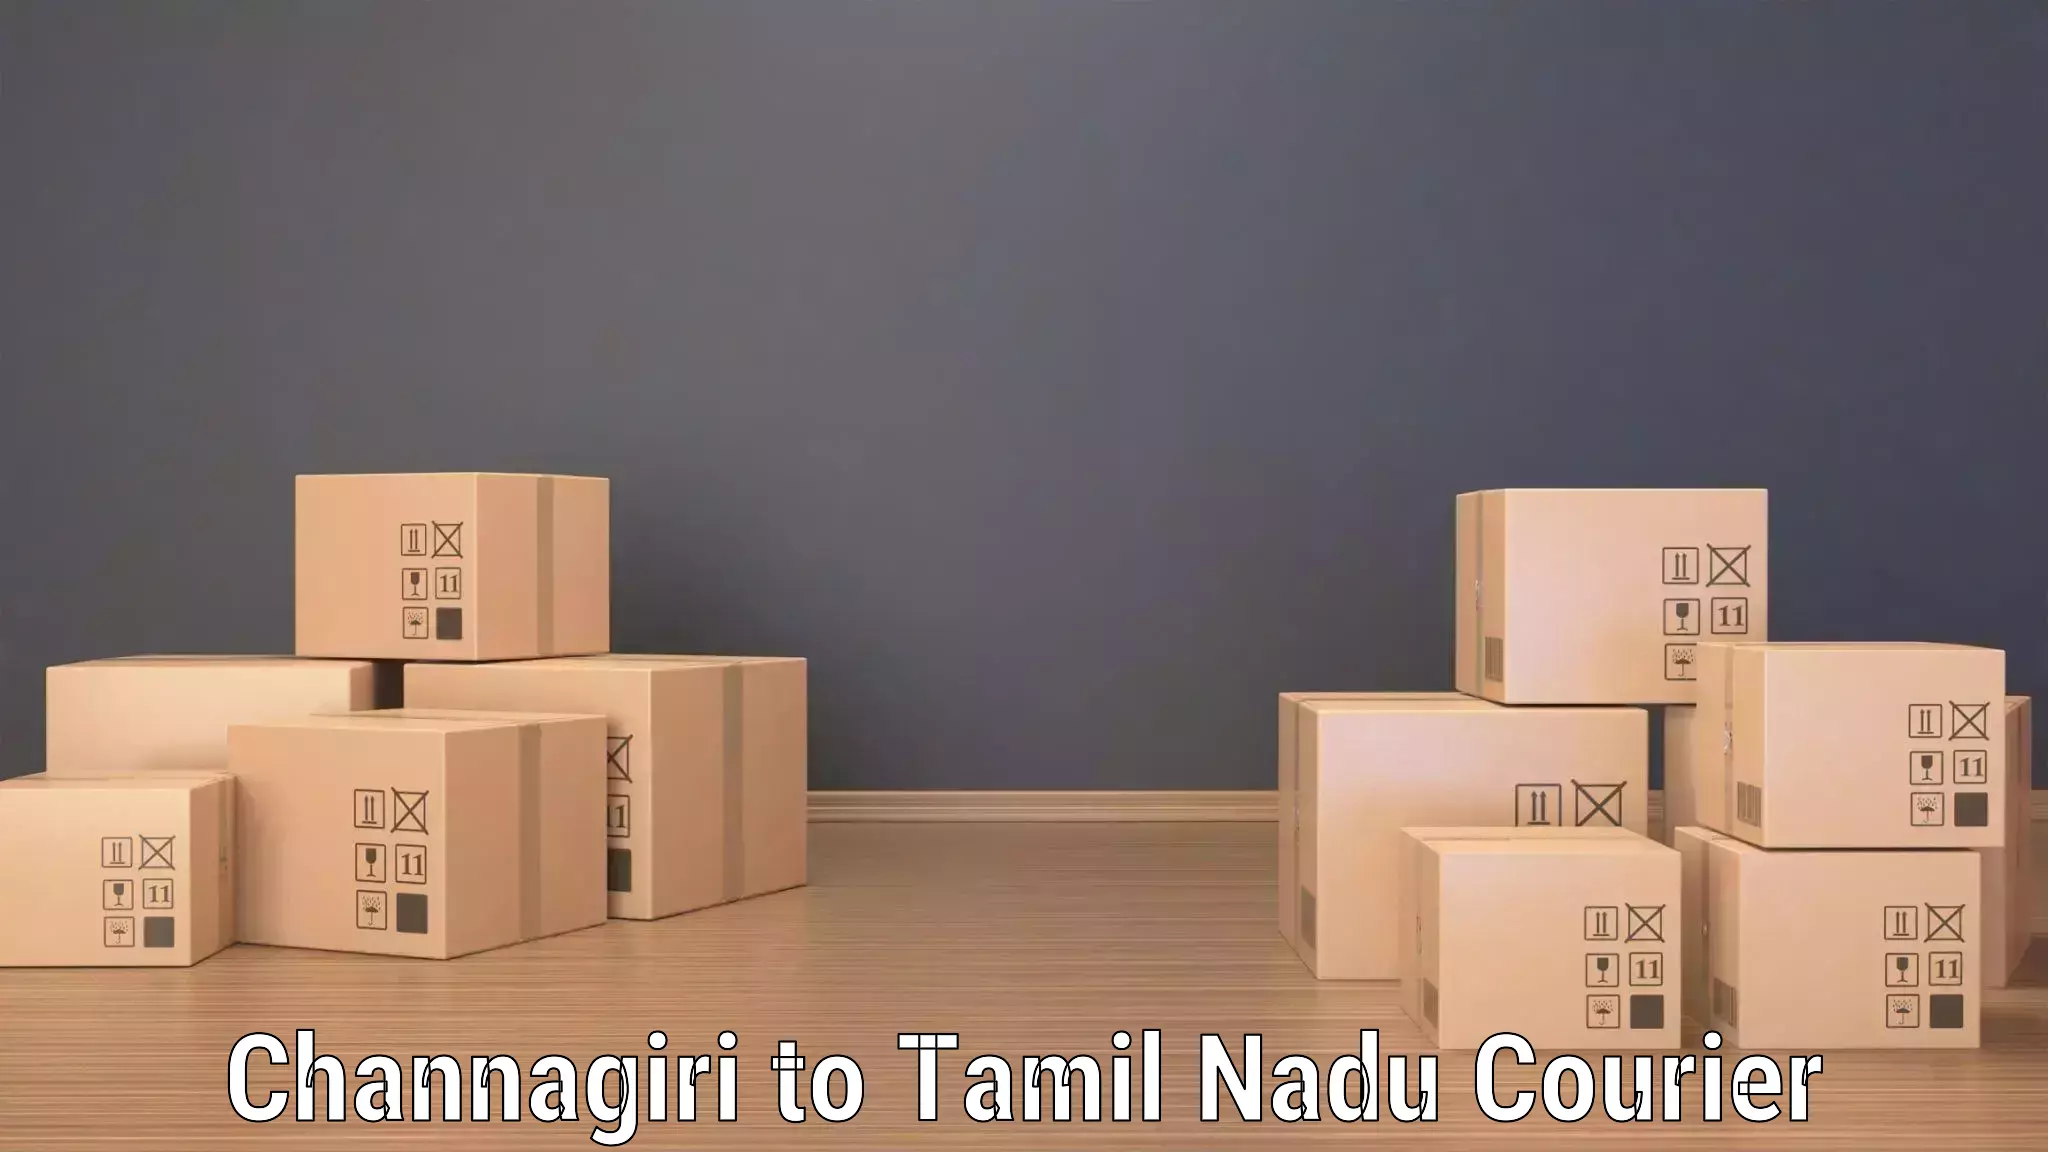 Courier service booking Channagiri to Tiruvannamalai